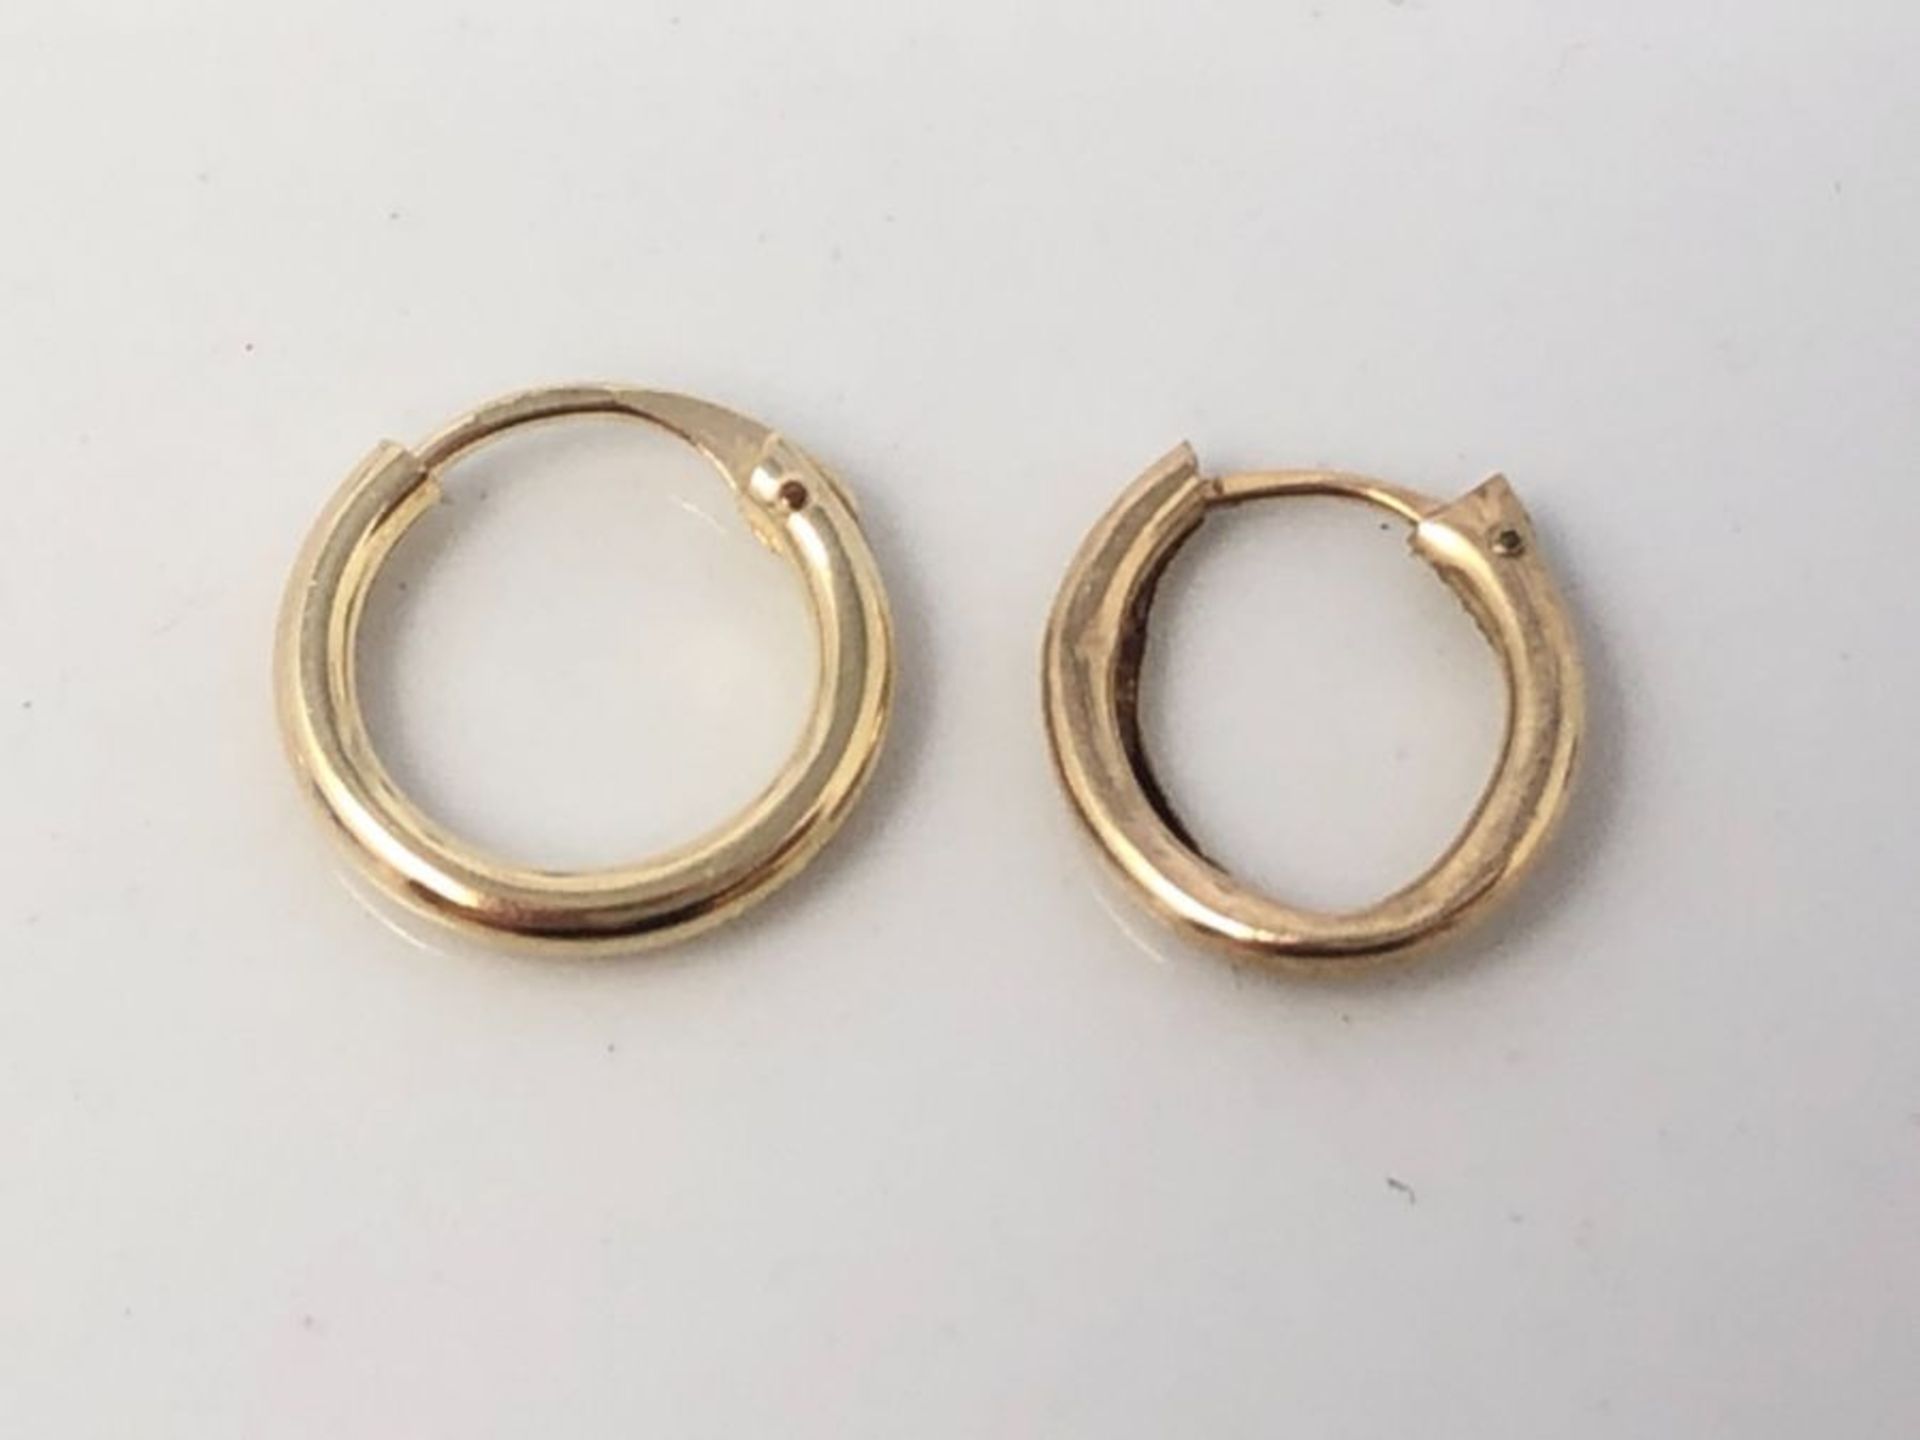 9ct Yellow Gold Hoop 10x1.5 mm Earrings - Image 2 of 2